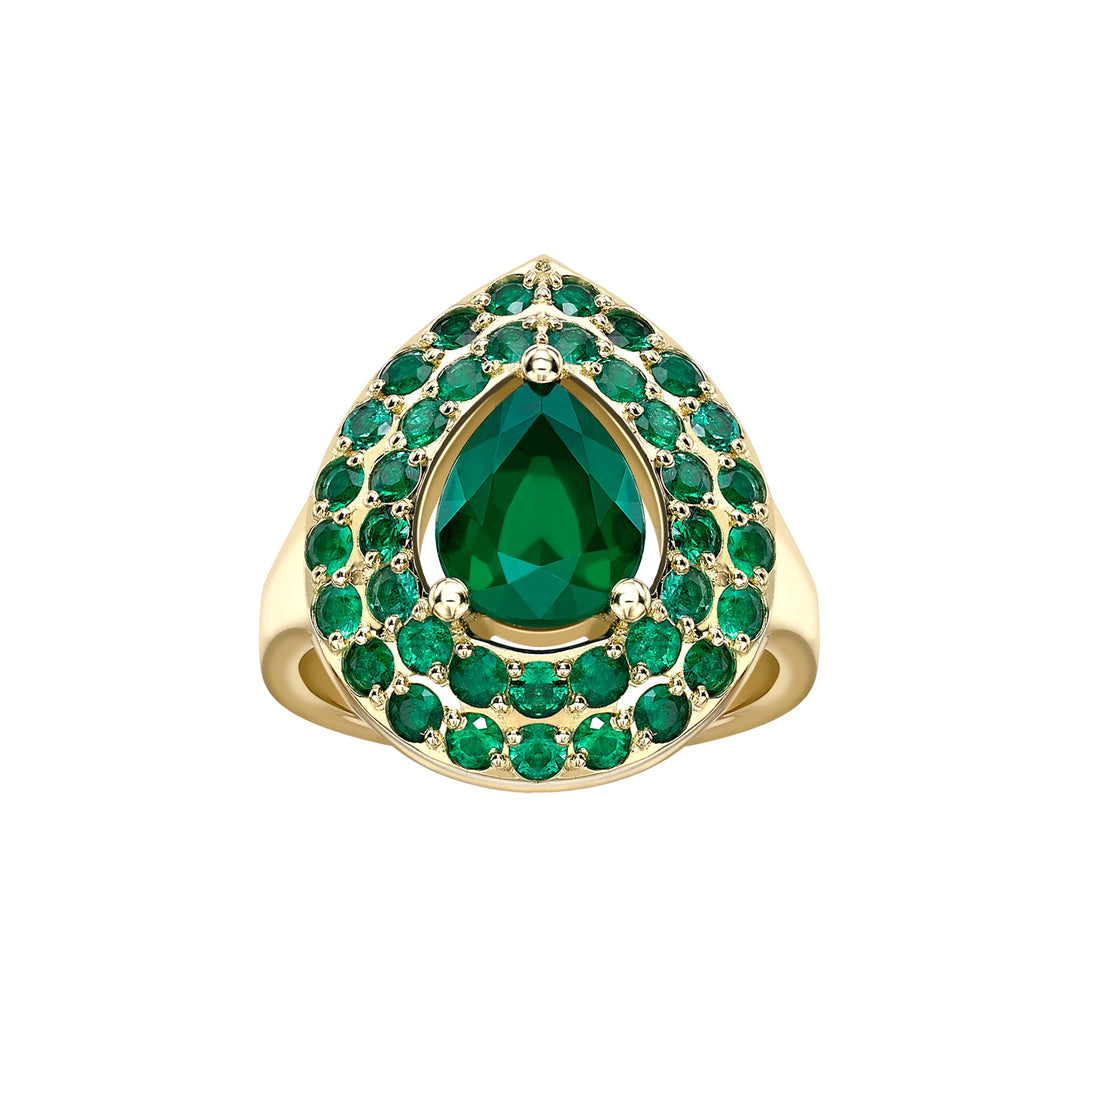  Pear Drop Emerald Ring by Hattie Rickards | The Cut London